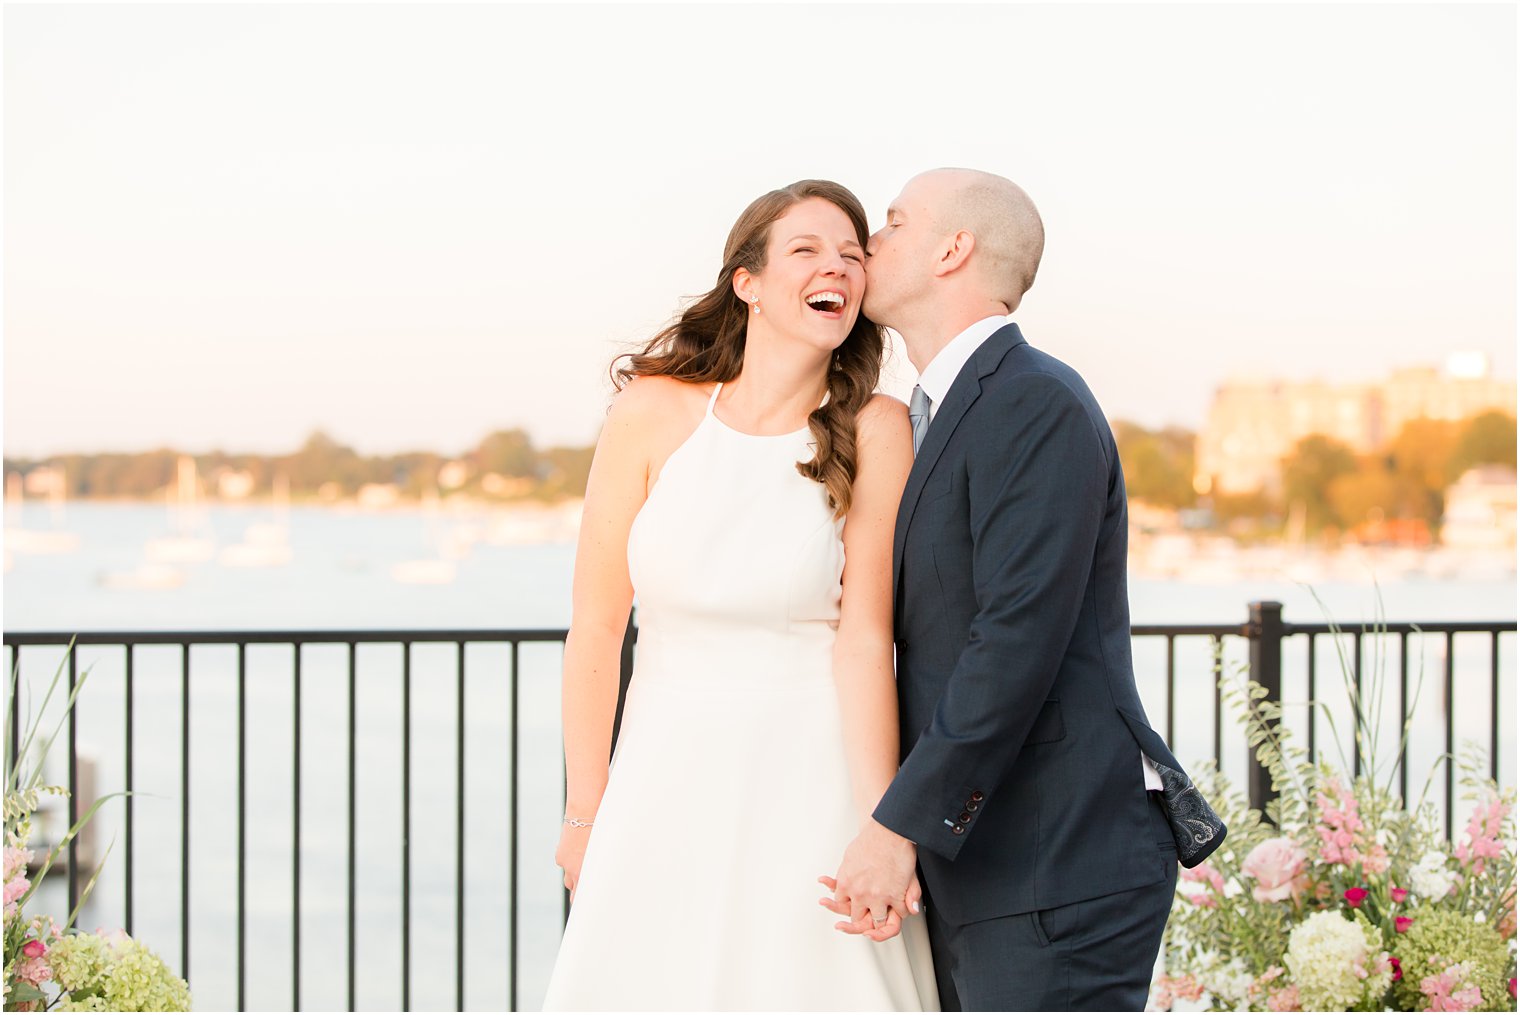 groom kisses bride's cheek during wedding photos in Red Bank NJ